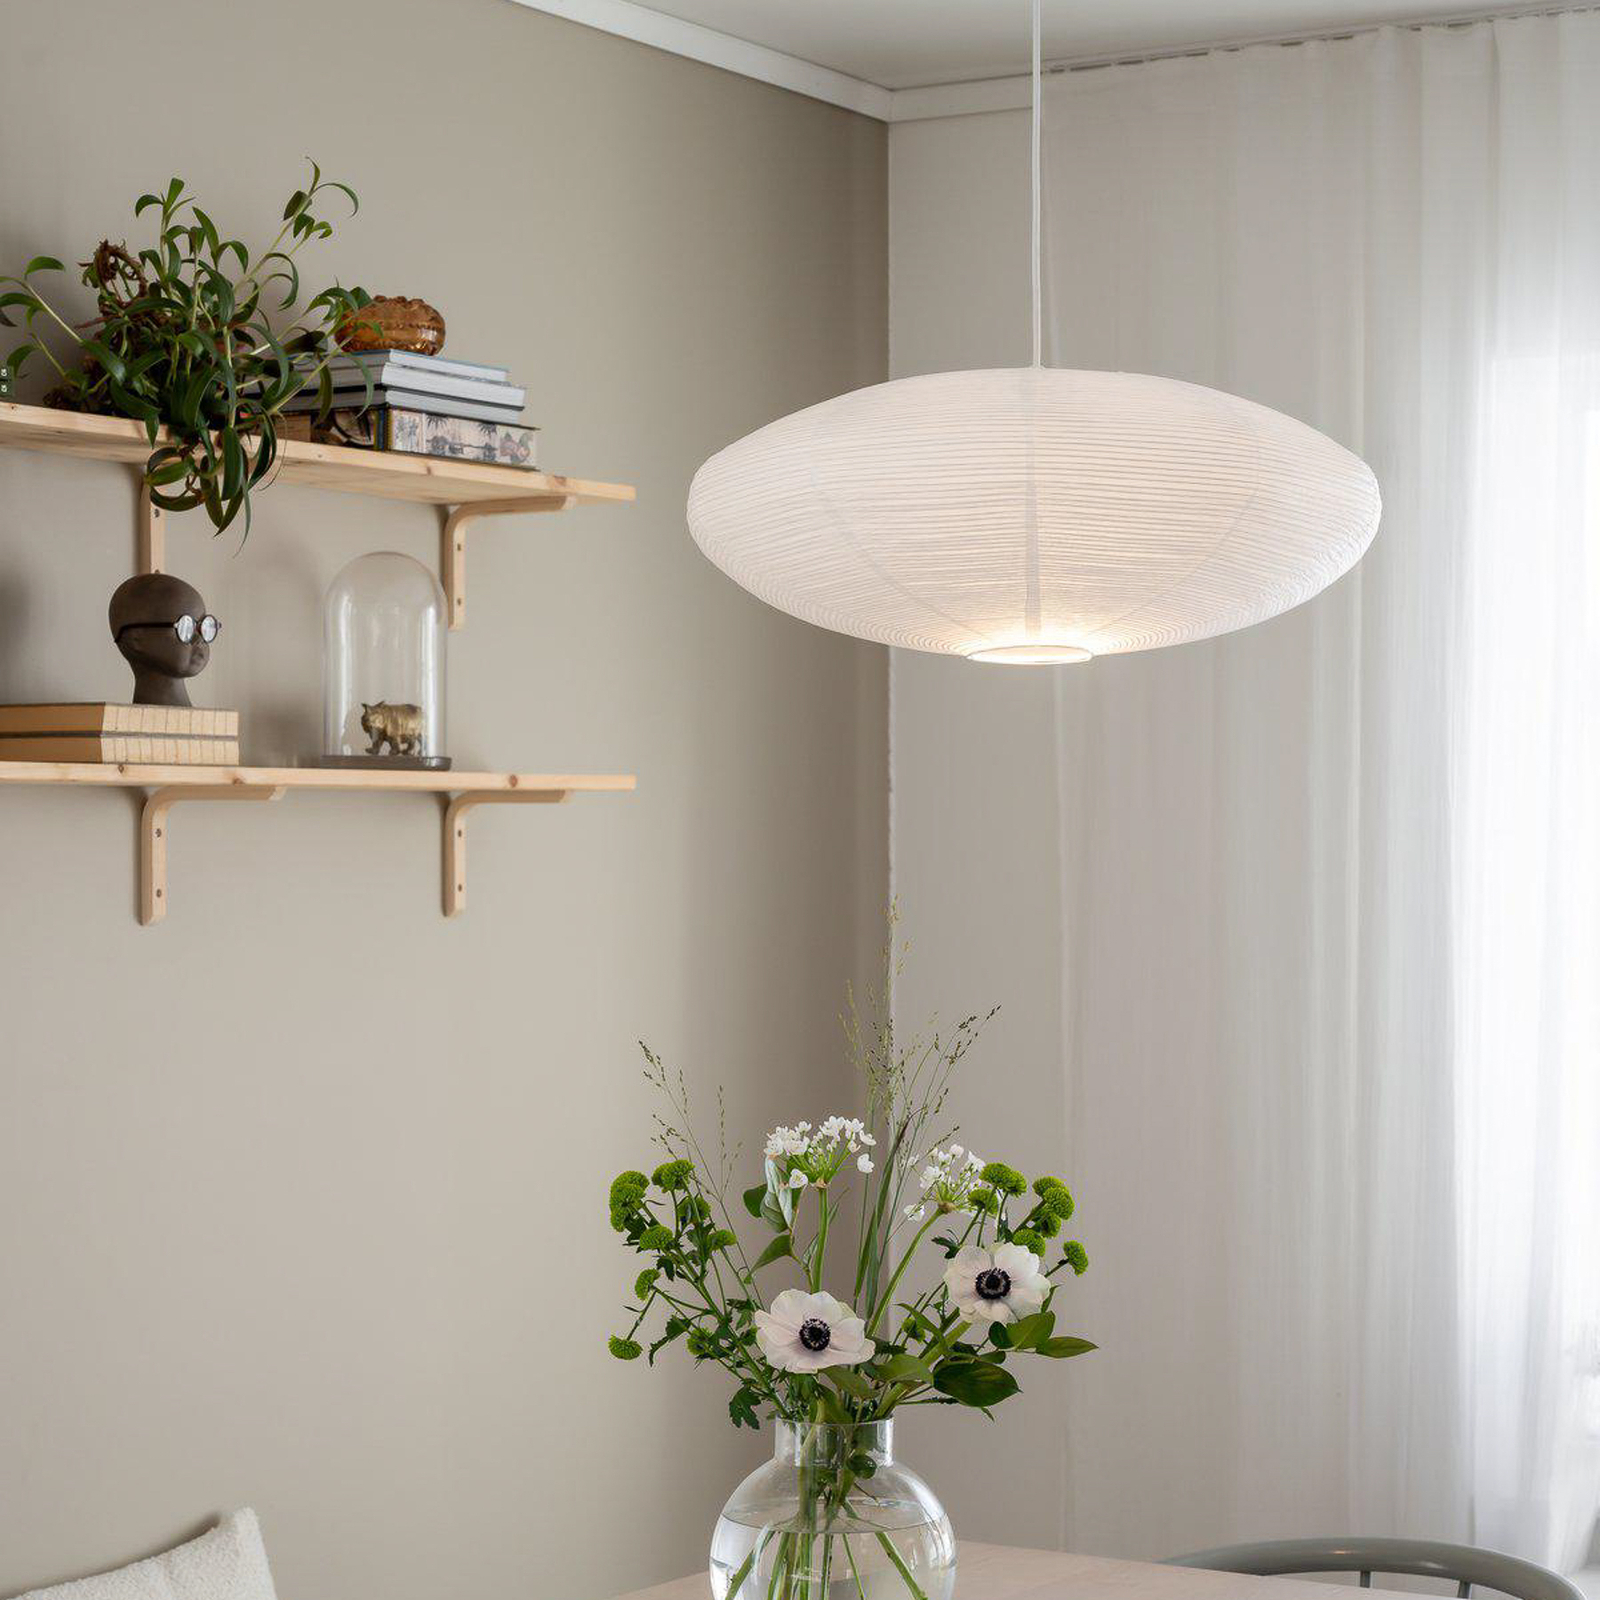 PR Home hanging light Yuni, white, Ø 60 cm, white suspension system, E14